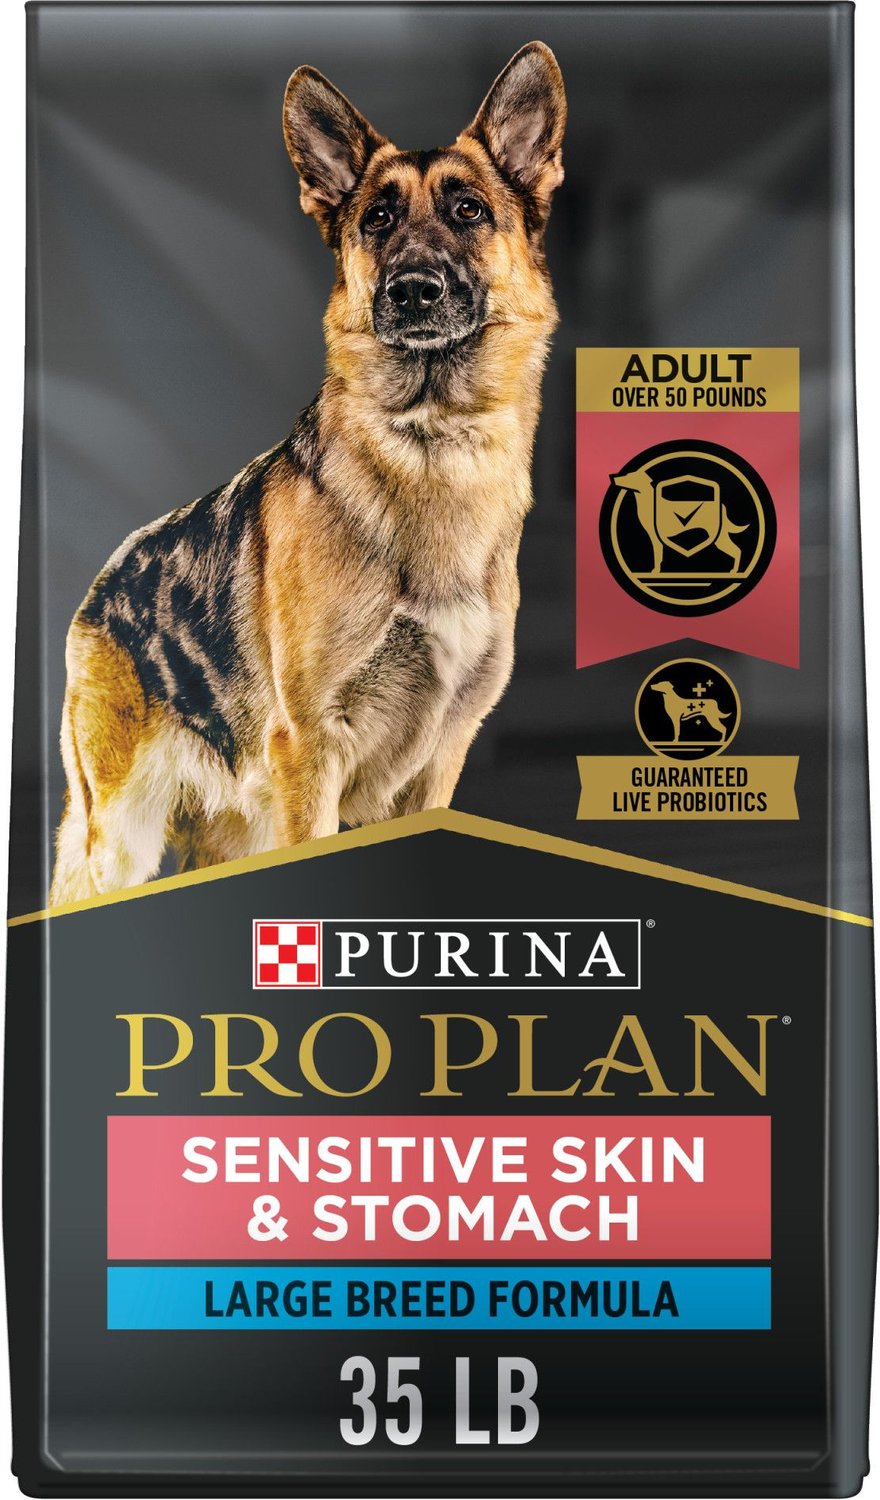 purina dog chow sensitive salmon & rice